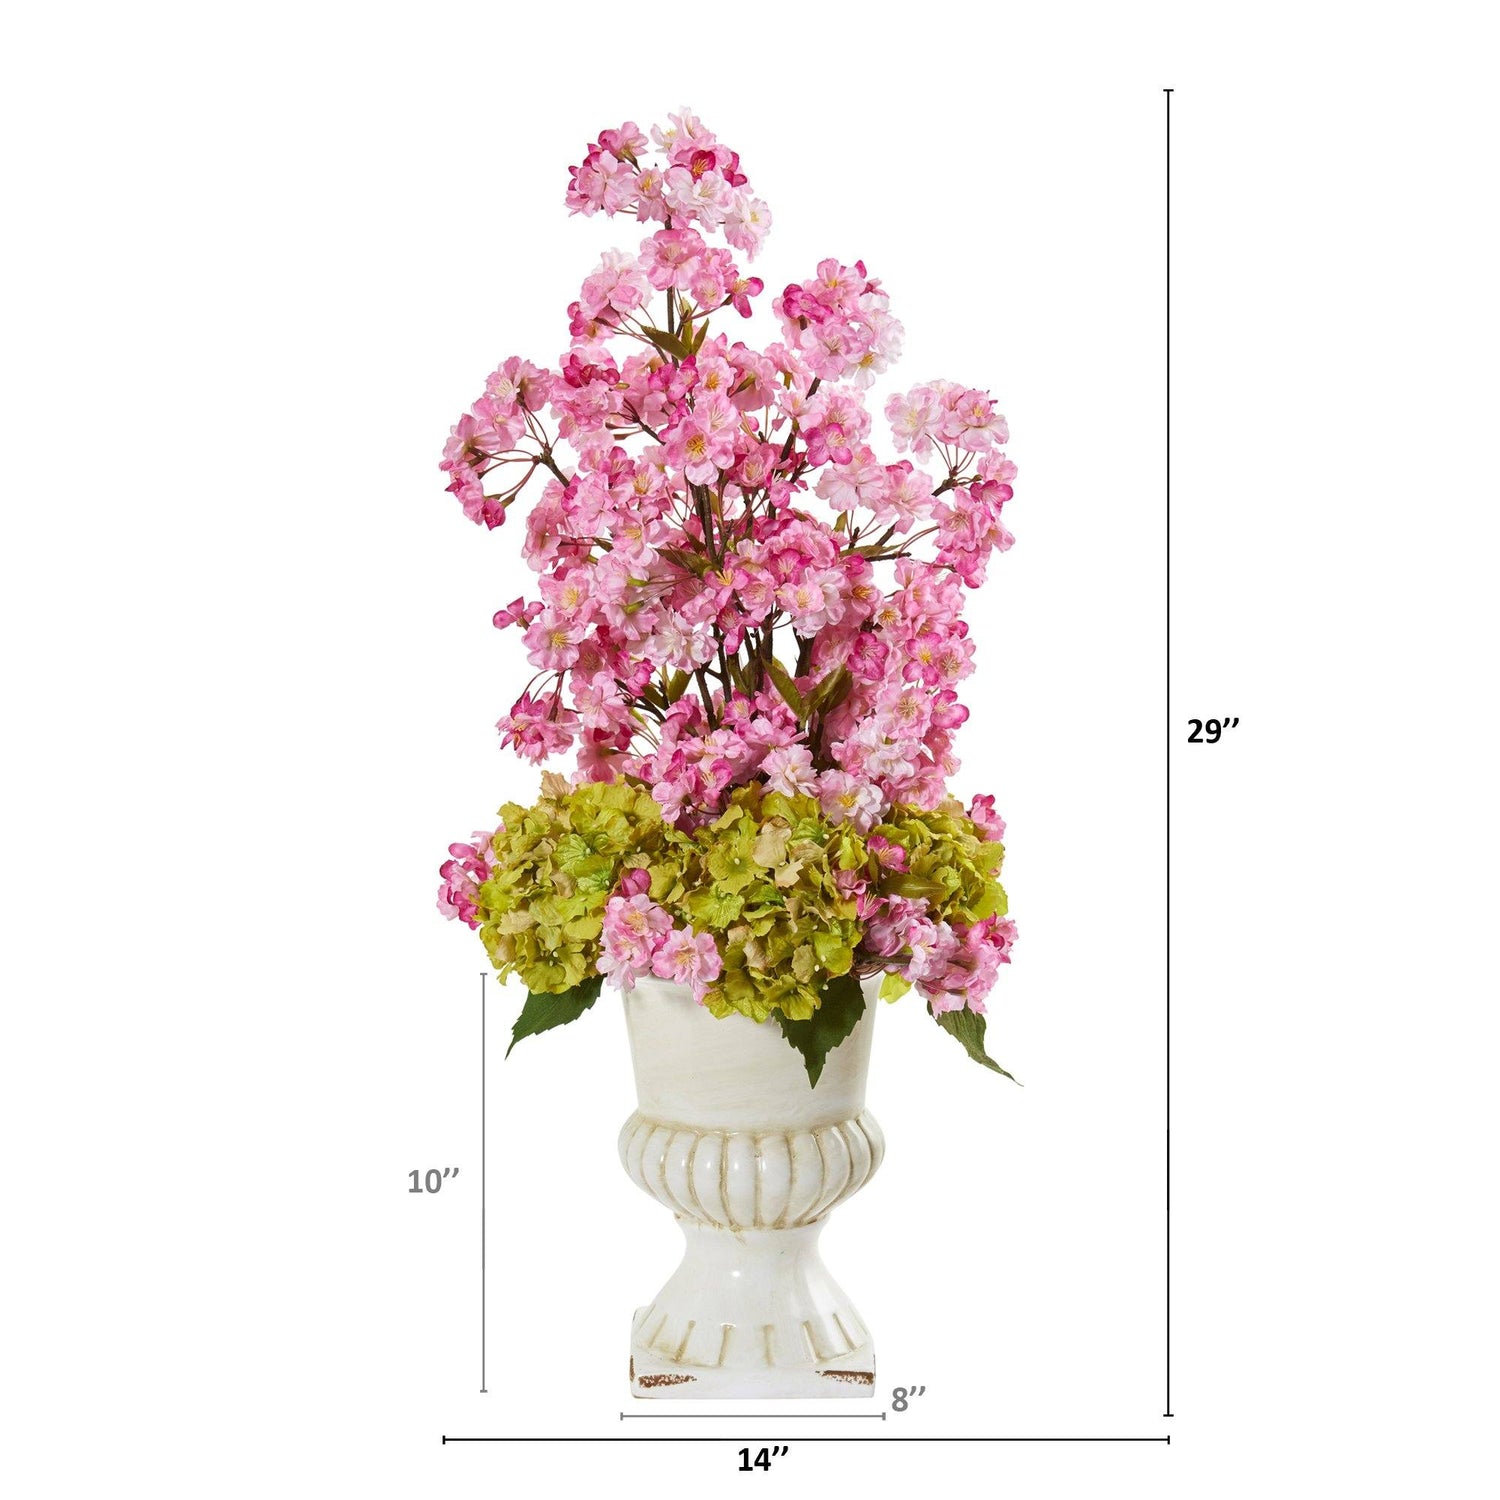 29” Hydrangea and Cherry Blossom Artificial Arrangement in White Urn